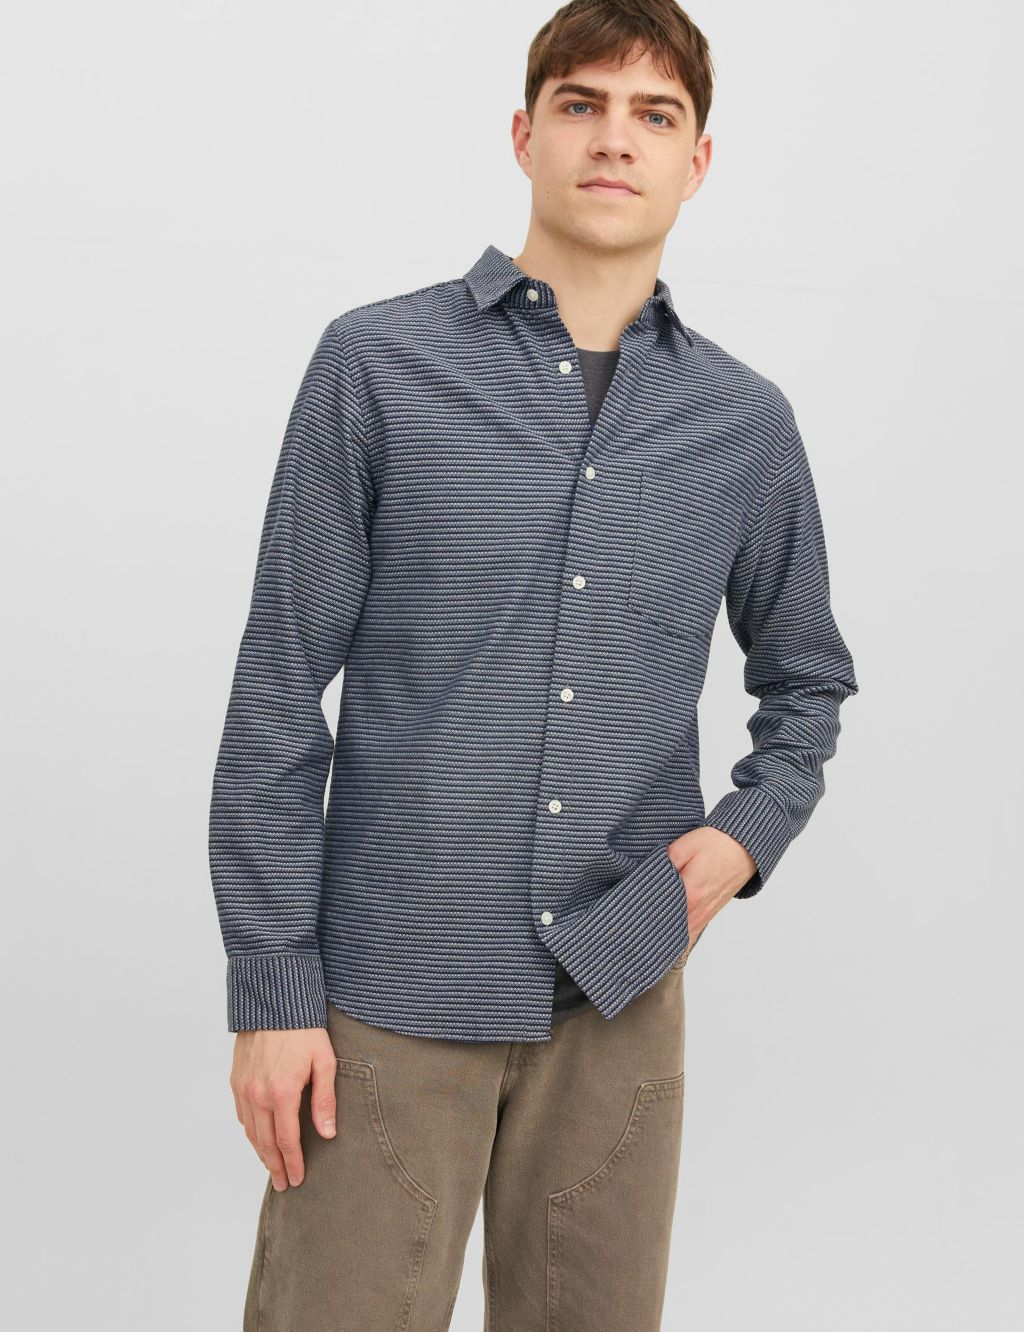 Cotton Rich Striped Oxford Shirt image 1